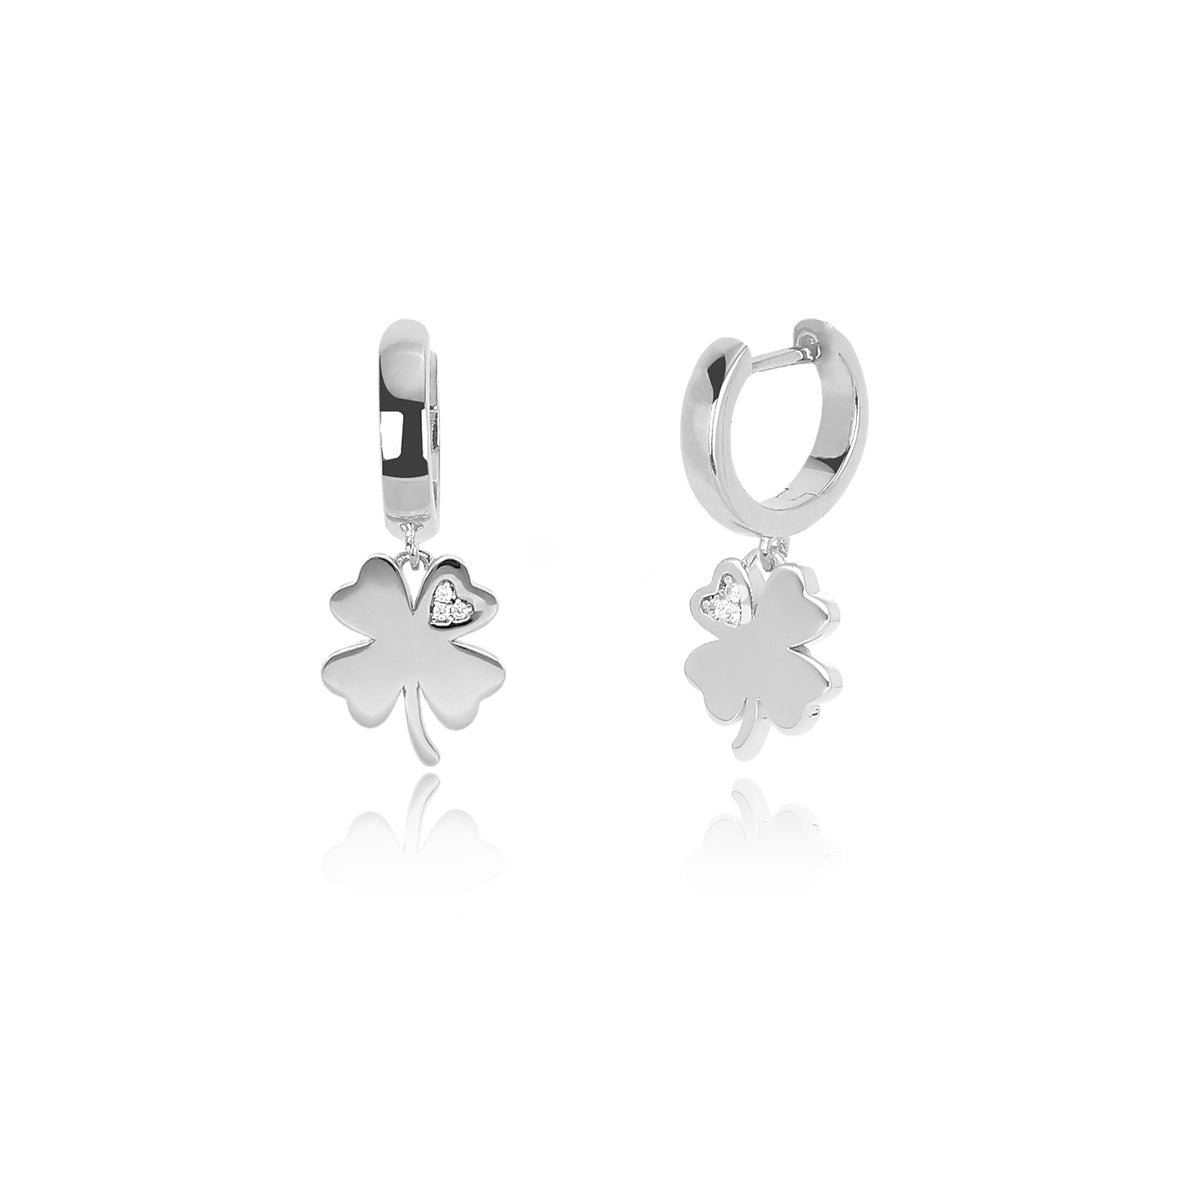 MABINA - Four-leaf clover earrings